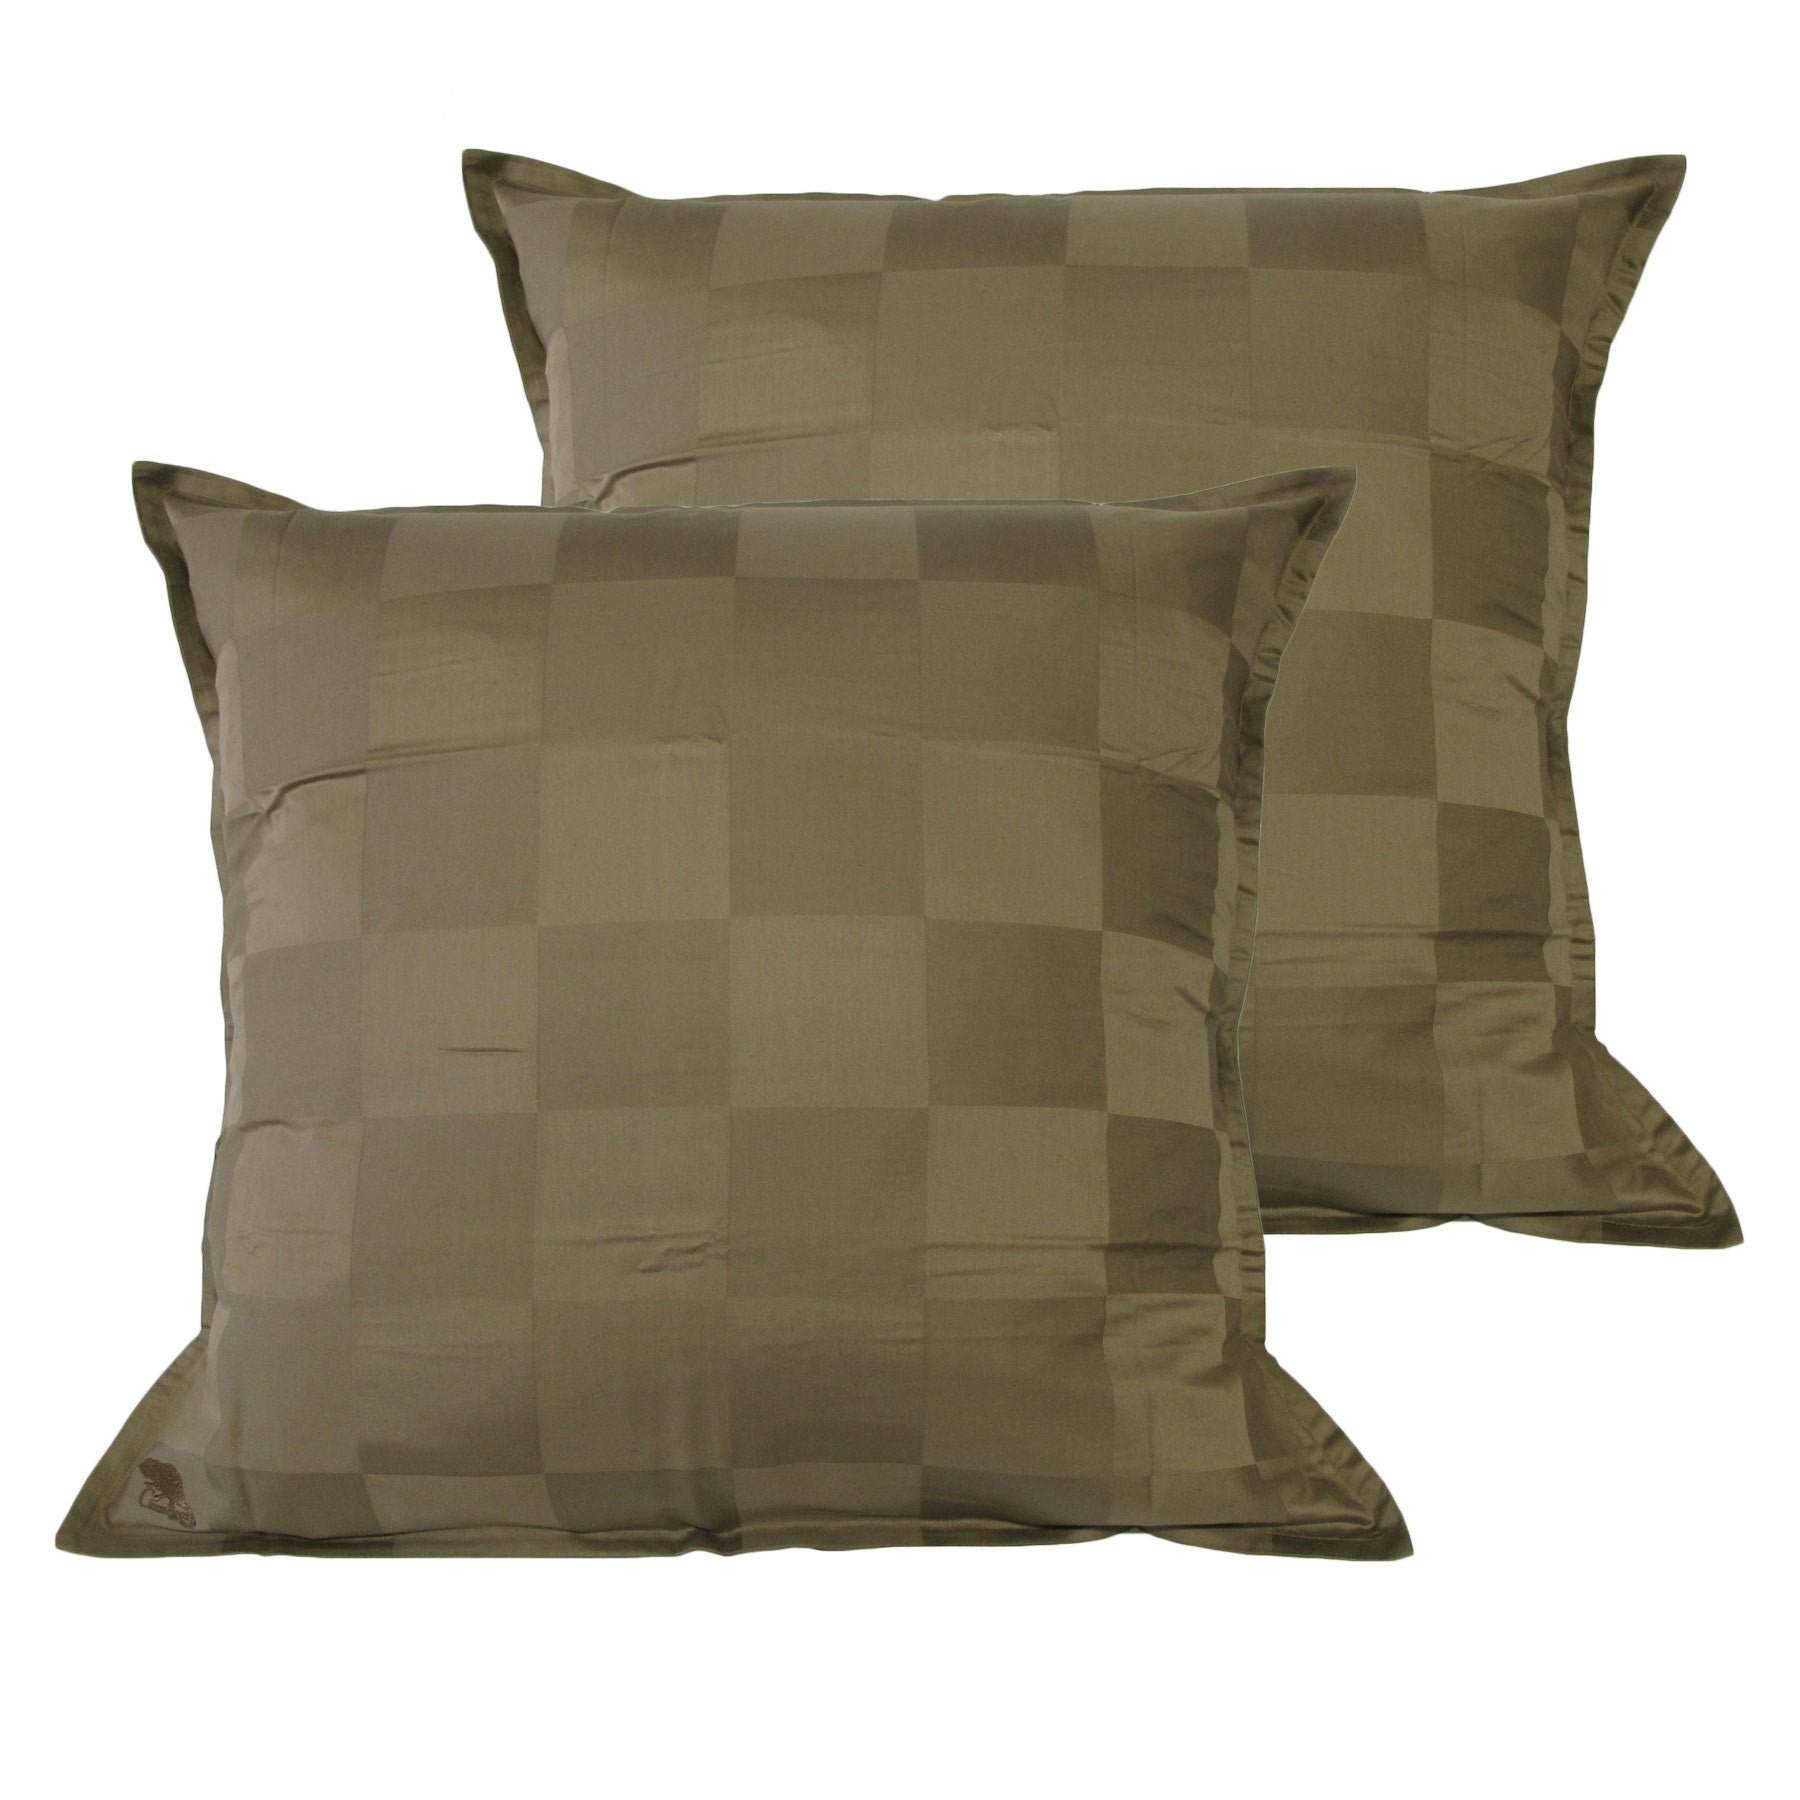 Pair of Dominic Olive European Pillowcases